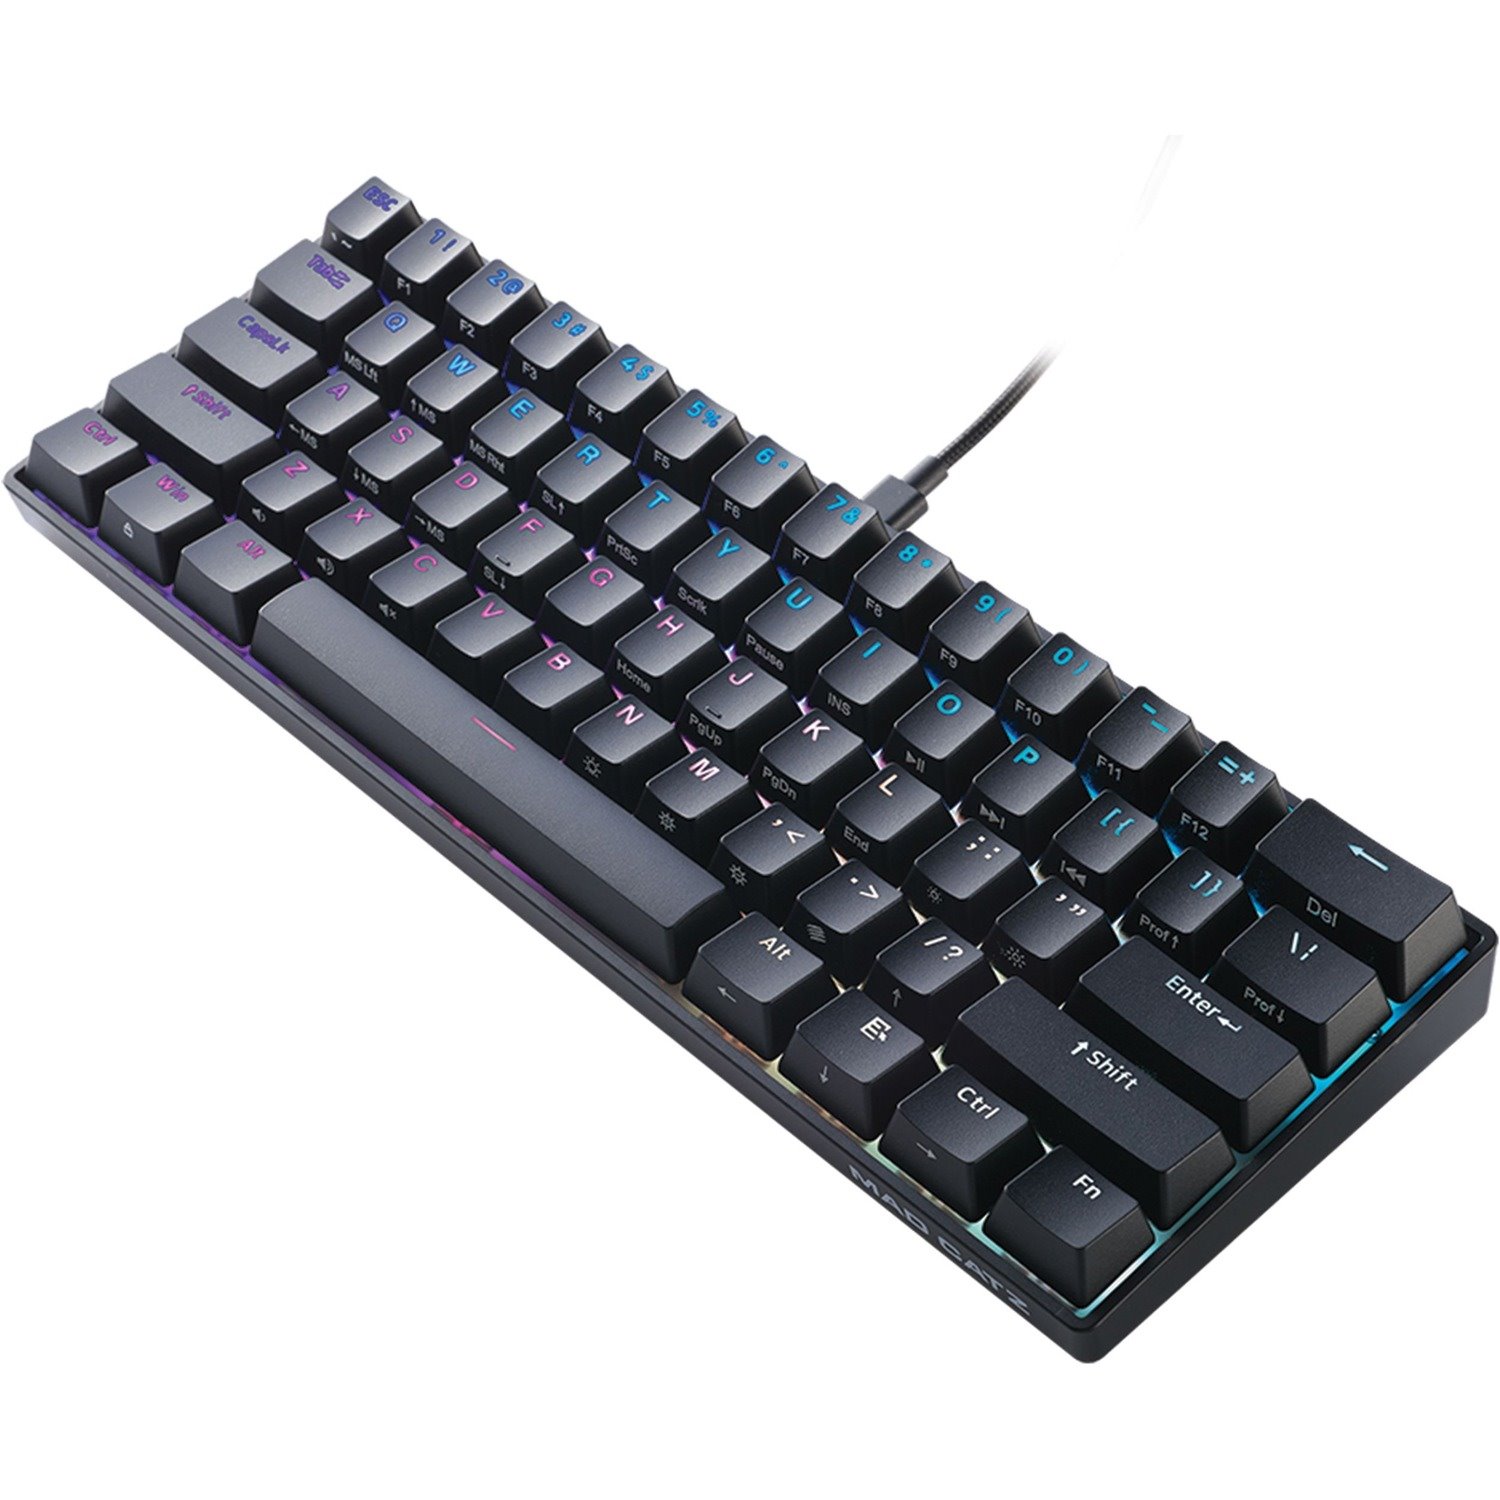 Verbatim S.T.R.I.K.E. 6 60% RGB Mechanical Keyboard